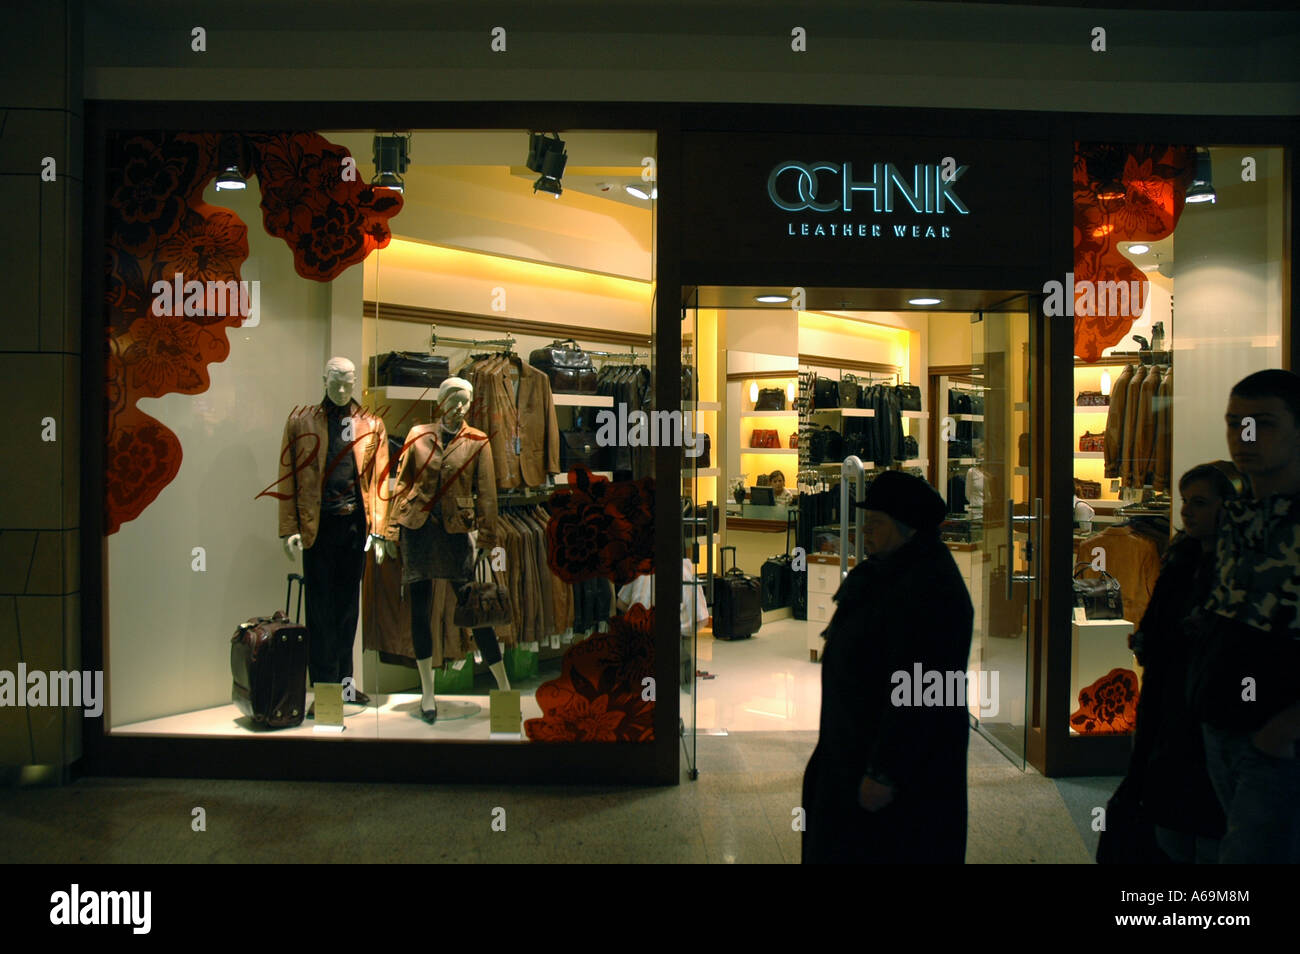 Ochnik Leather Wear store in Zlote Tarasy (Golden Terraces) shopping centre  in Warsaw, Poland Stock Photo - Alamy